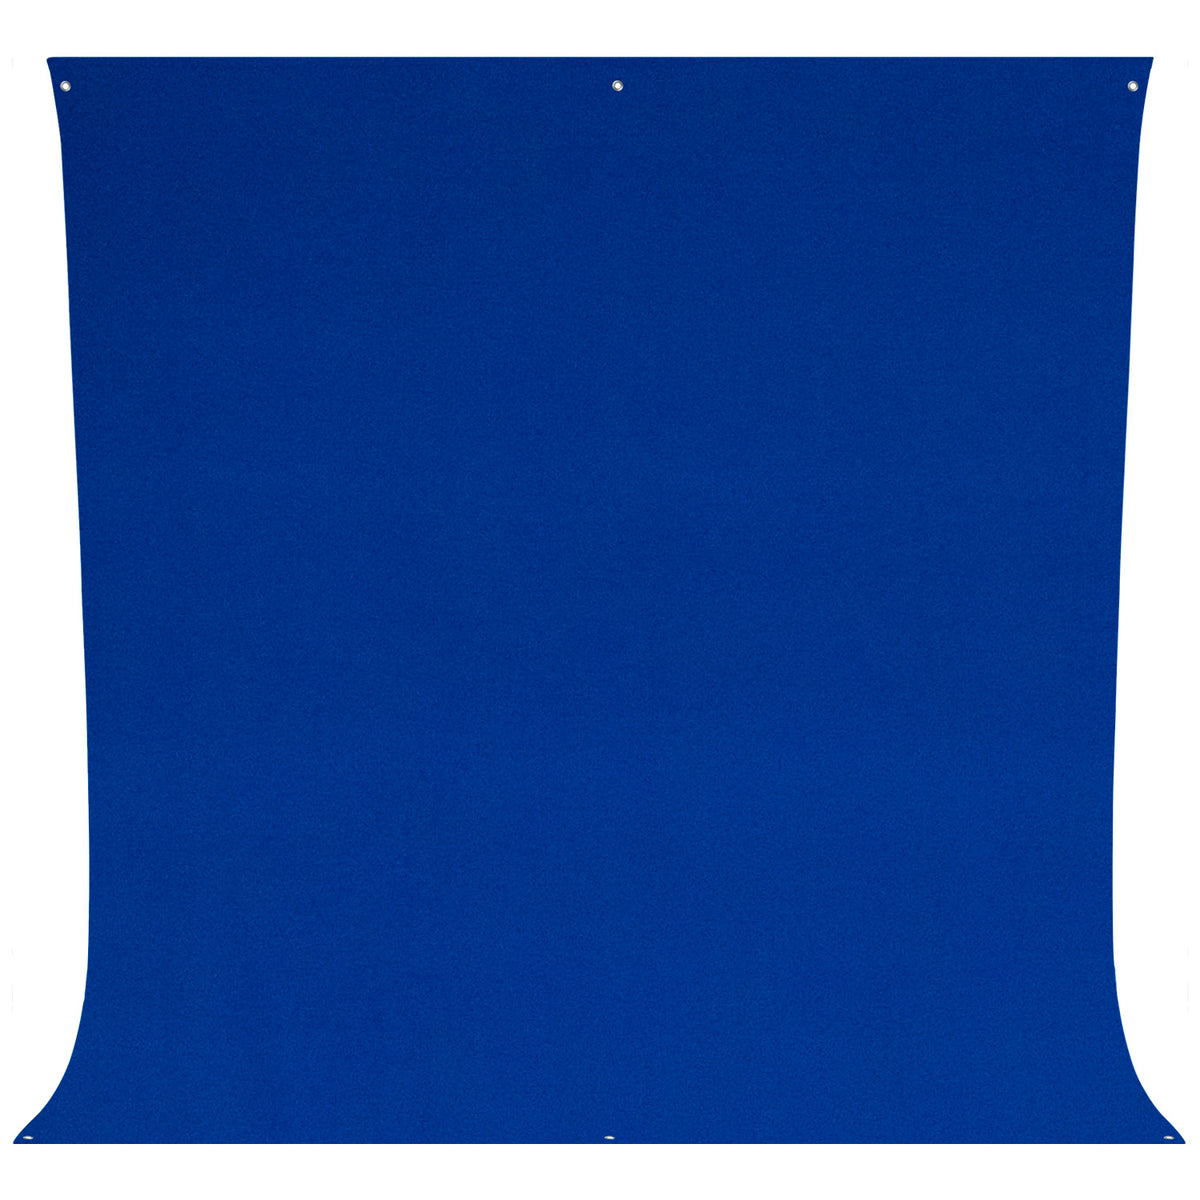 Wrinkle-Resistant Backdrop - Royal Blue / Chroma-Key Blue (9' x 10')